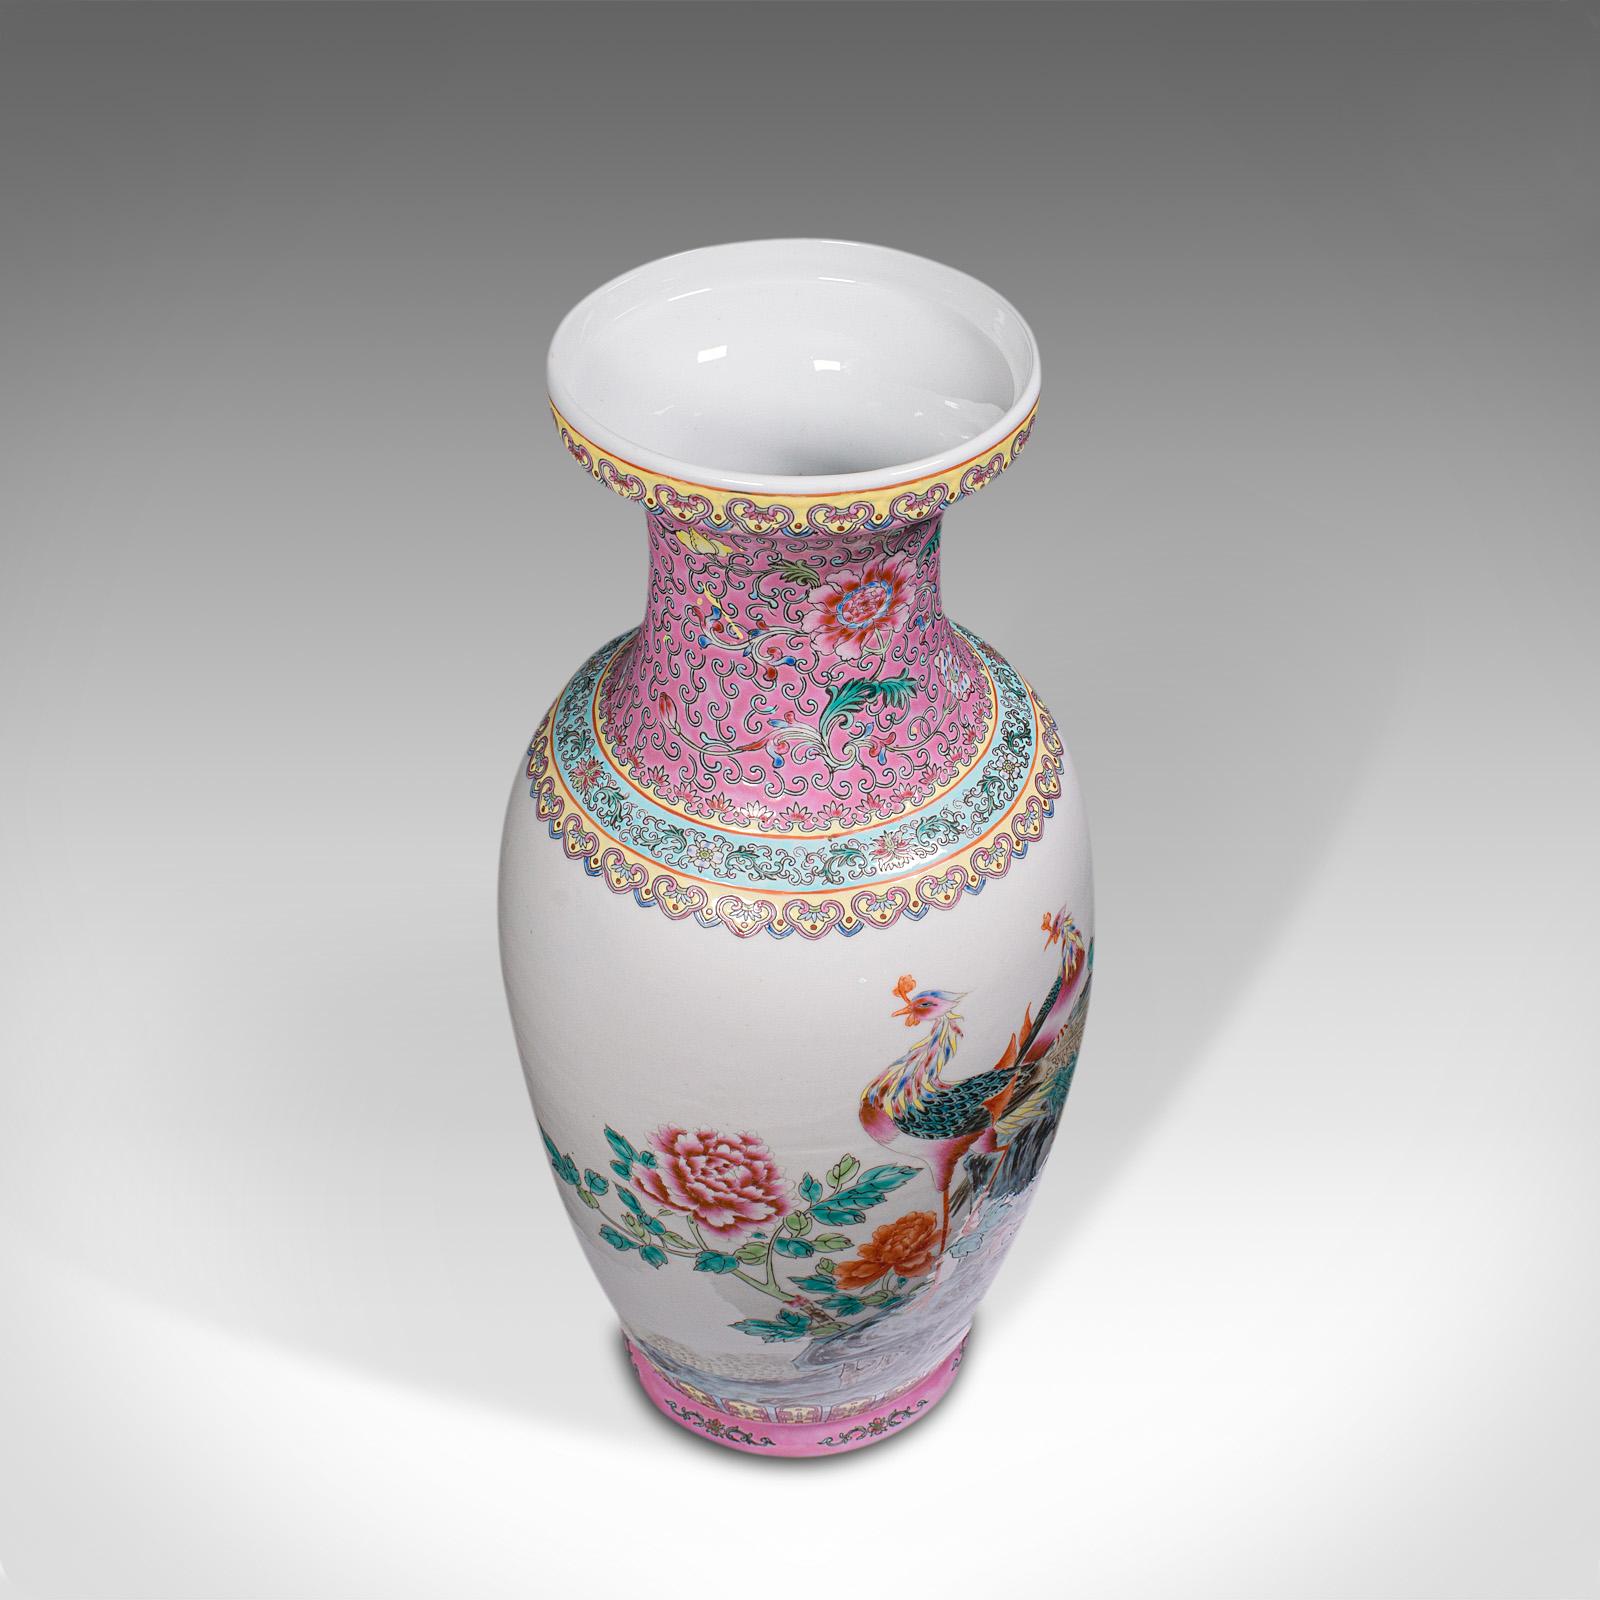 20th Century Tall Vintage Peacock Vase, Chinese, Ceramic, Decorative, Baluster Urn, Art Deco